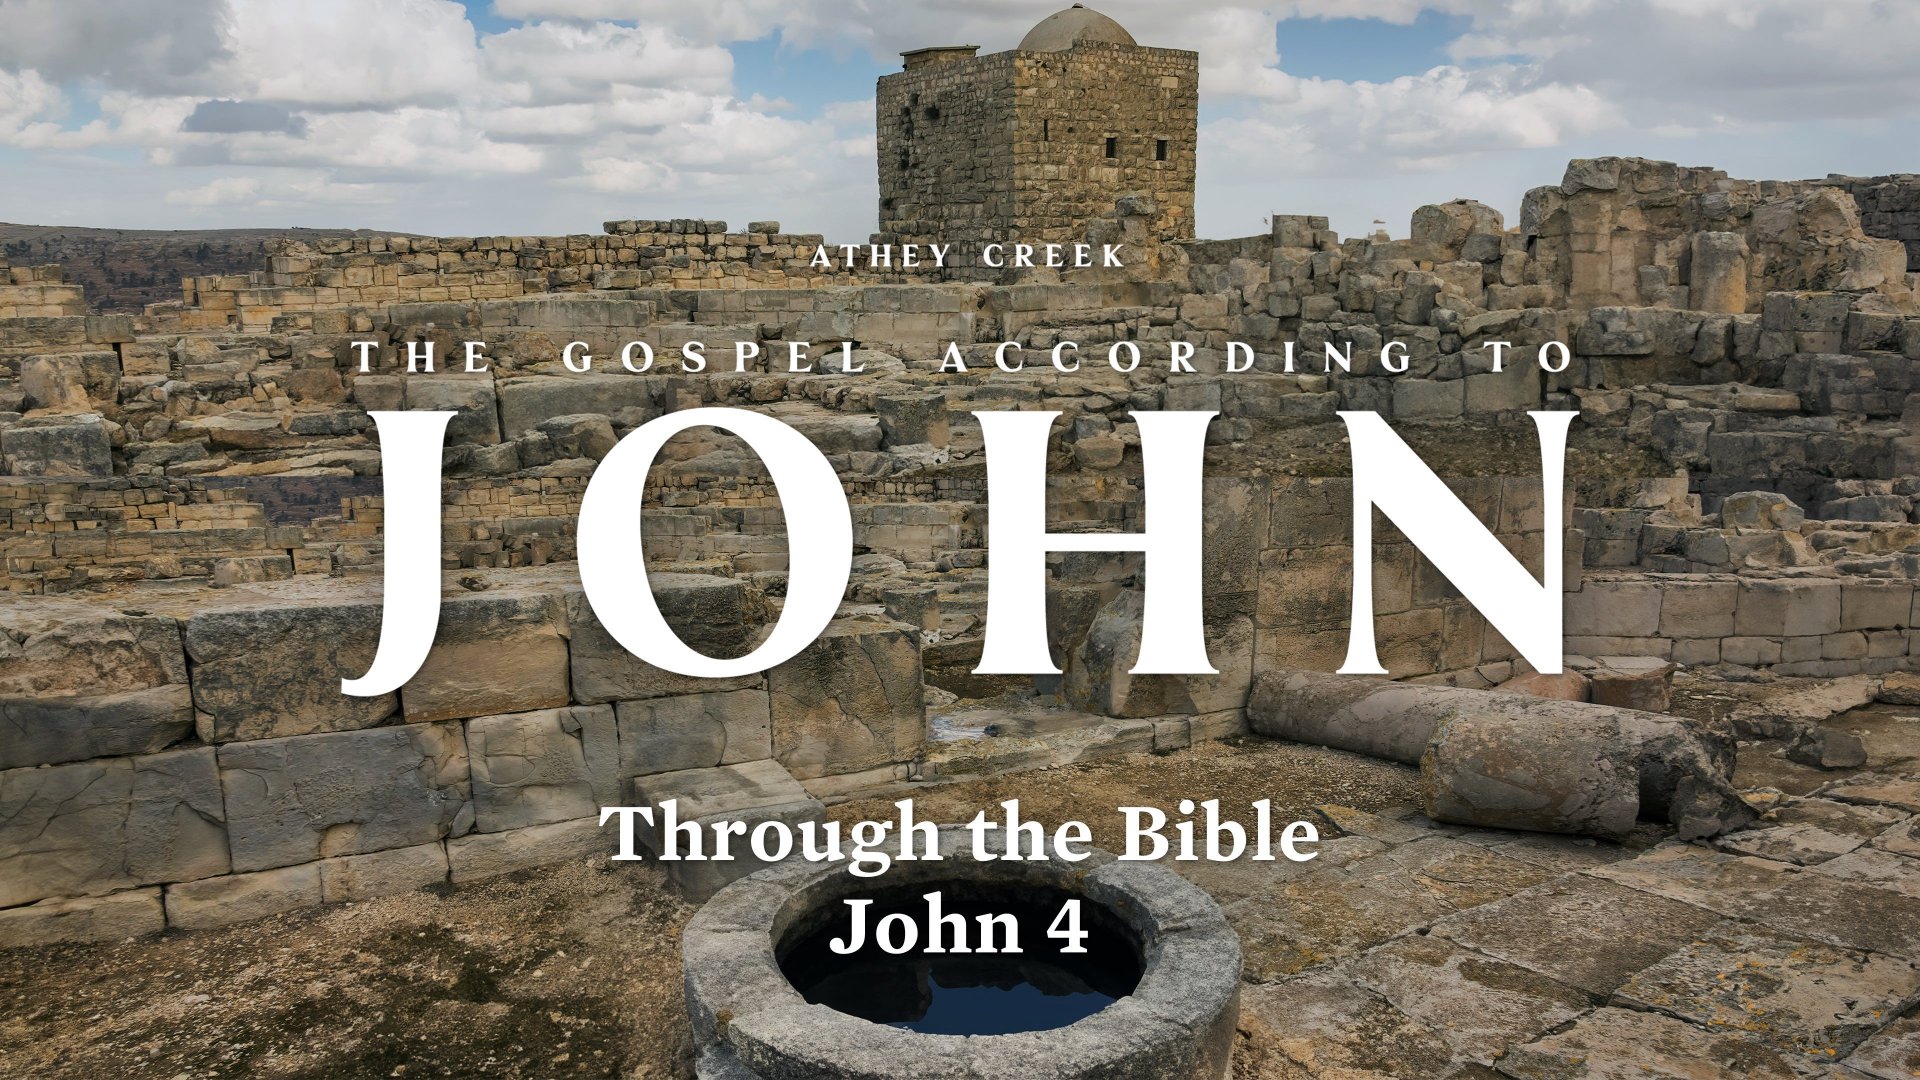 Teaching artwork for Through the Bible | John 1:19-51